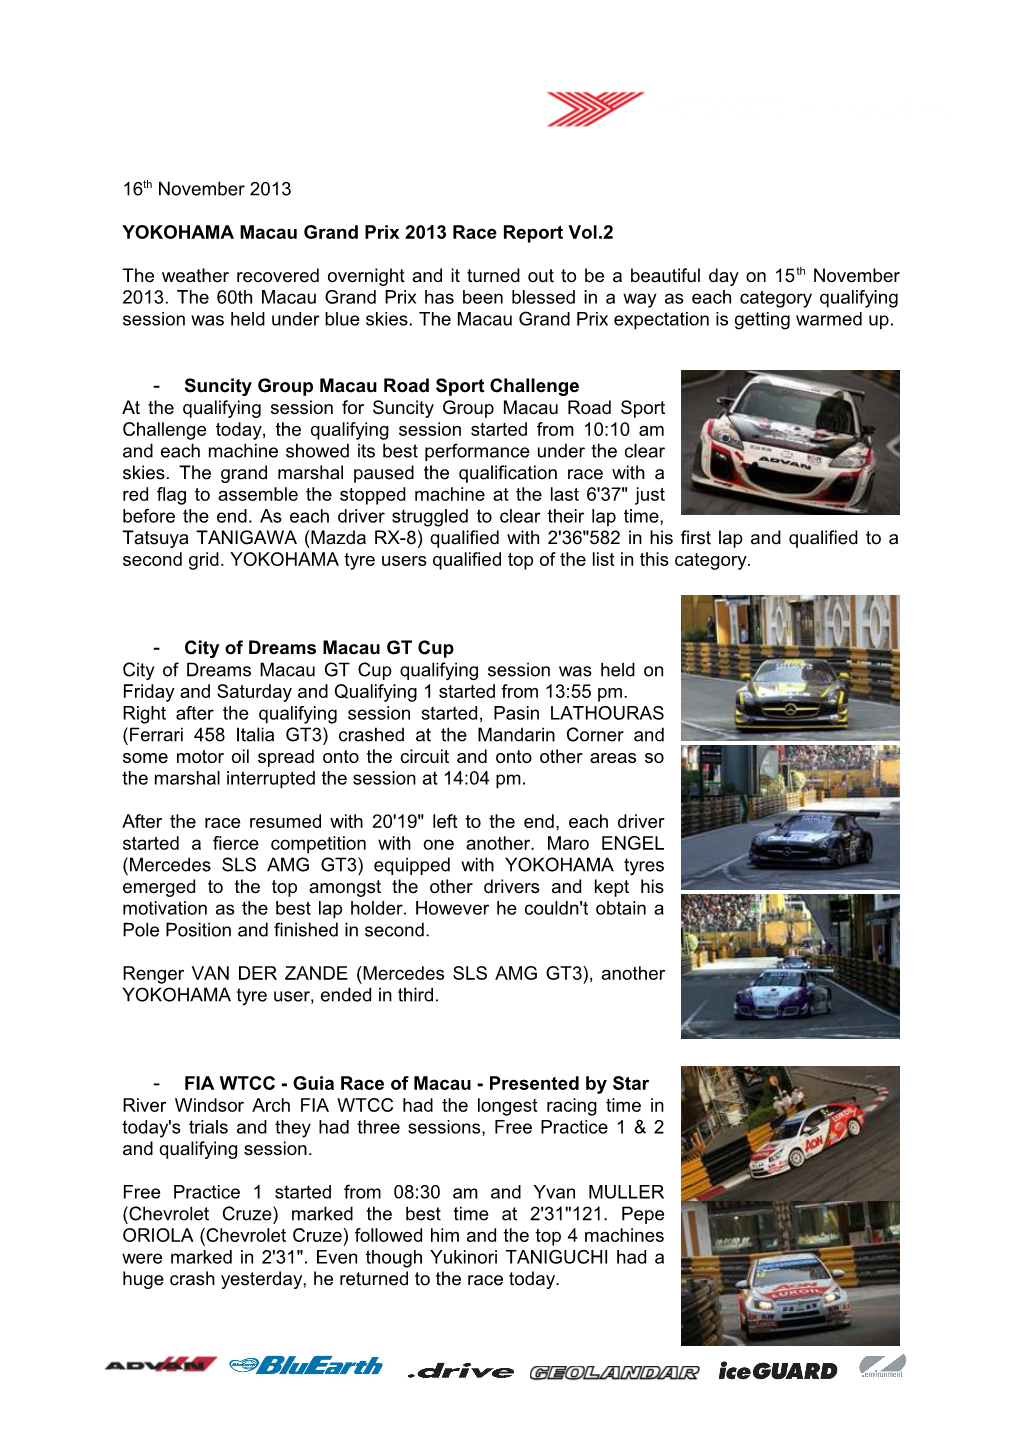 YOKOHAMA Macau Grand Prix 2013 Race Report Vol.2